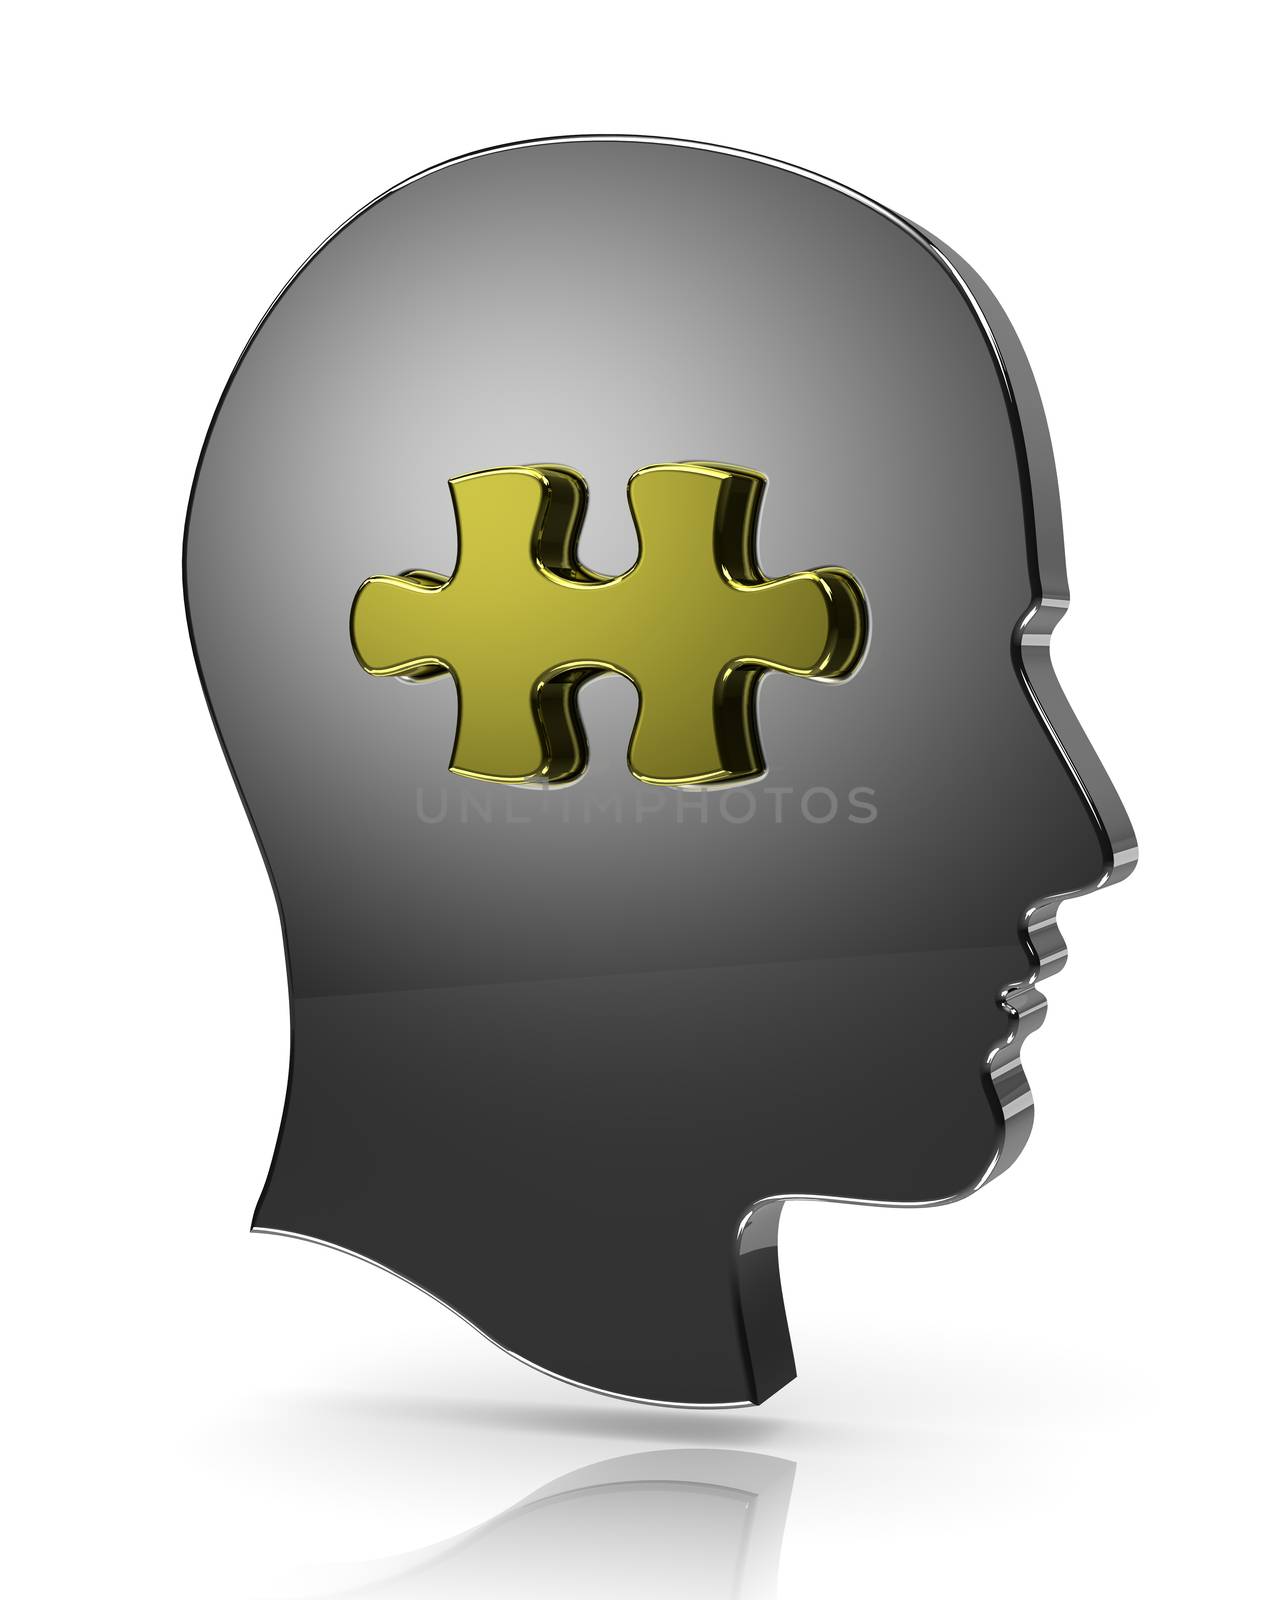 Metallic Human Head with Puzzle Piece Illustration